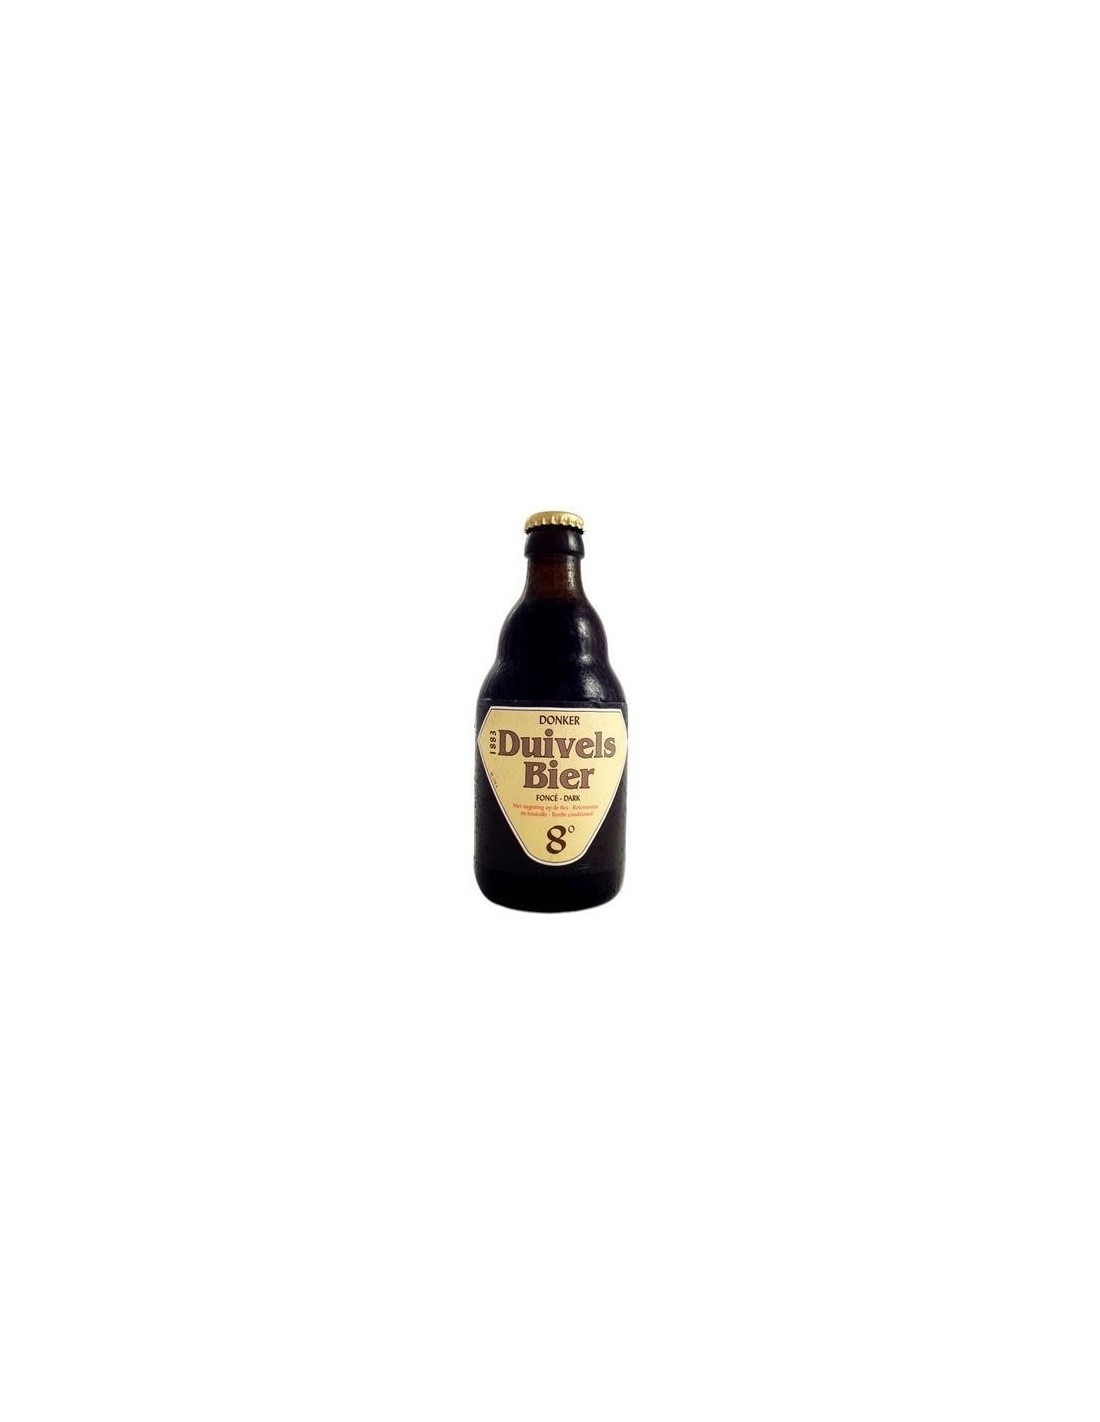 Bere bruna, artizanala DuiveL, 8% alc., 0.33L, Olanda alcooldiscount.ro